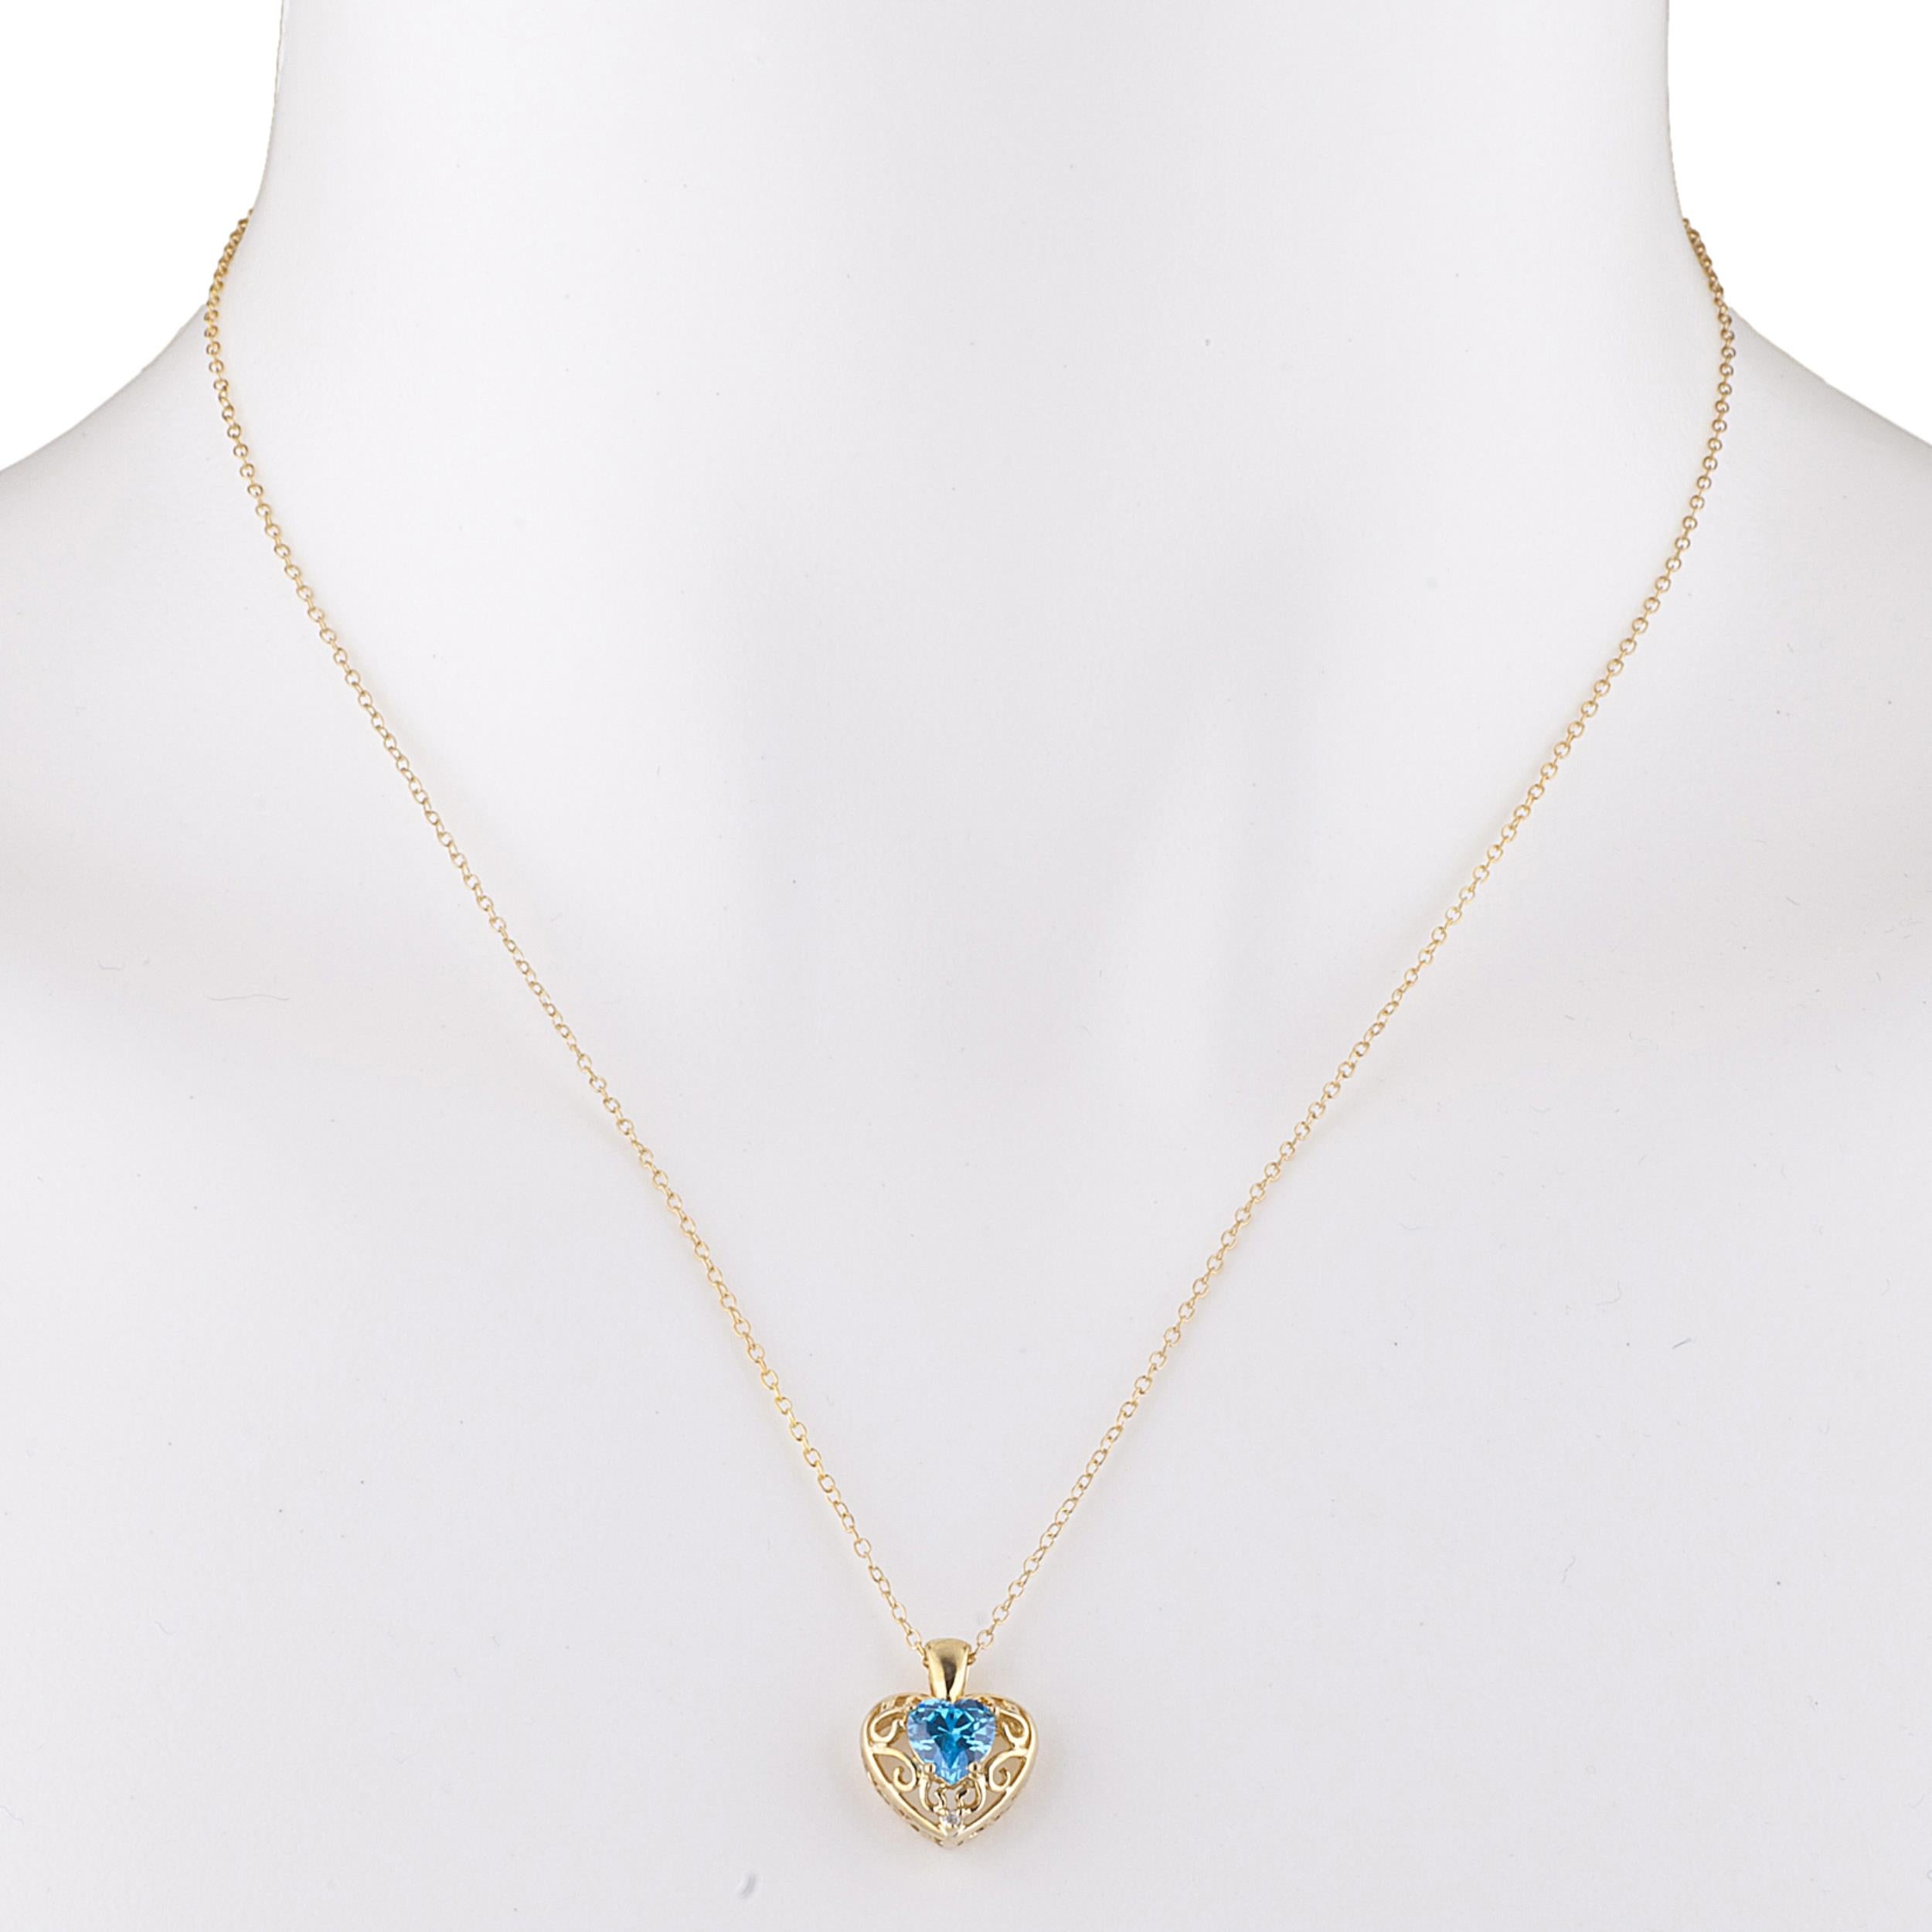 14Kt Gold Swiss Blue Topaz & Diamond Heart LOVE ENGRAVED Pendant Necklace